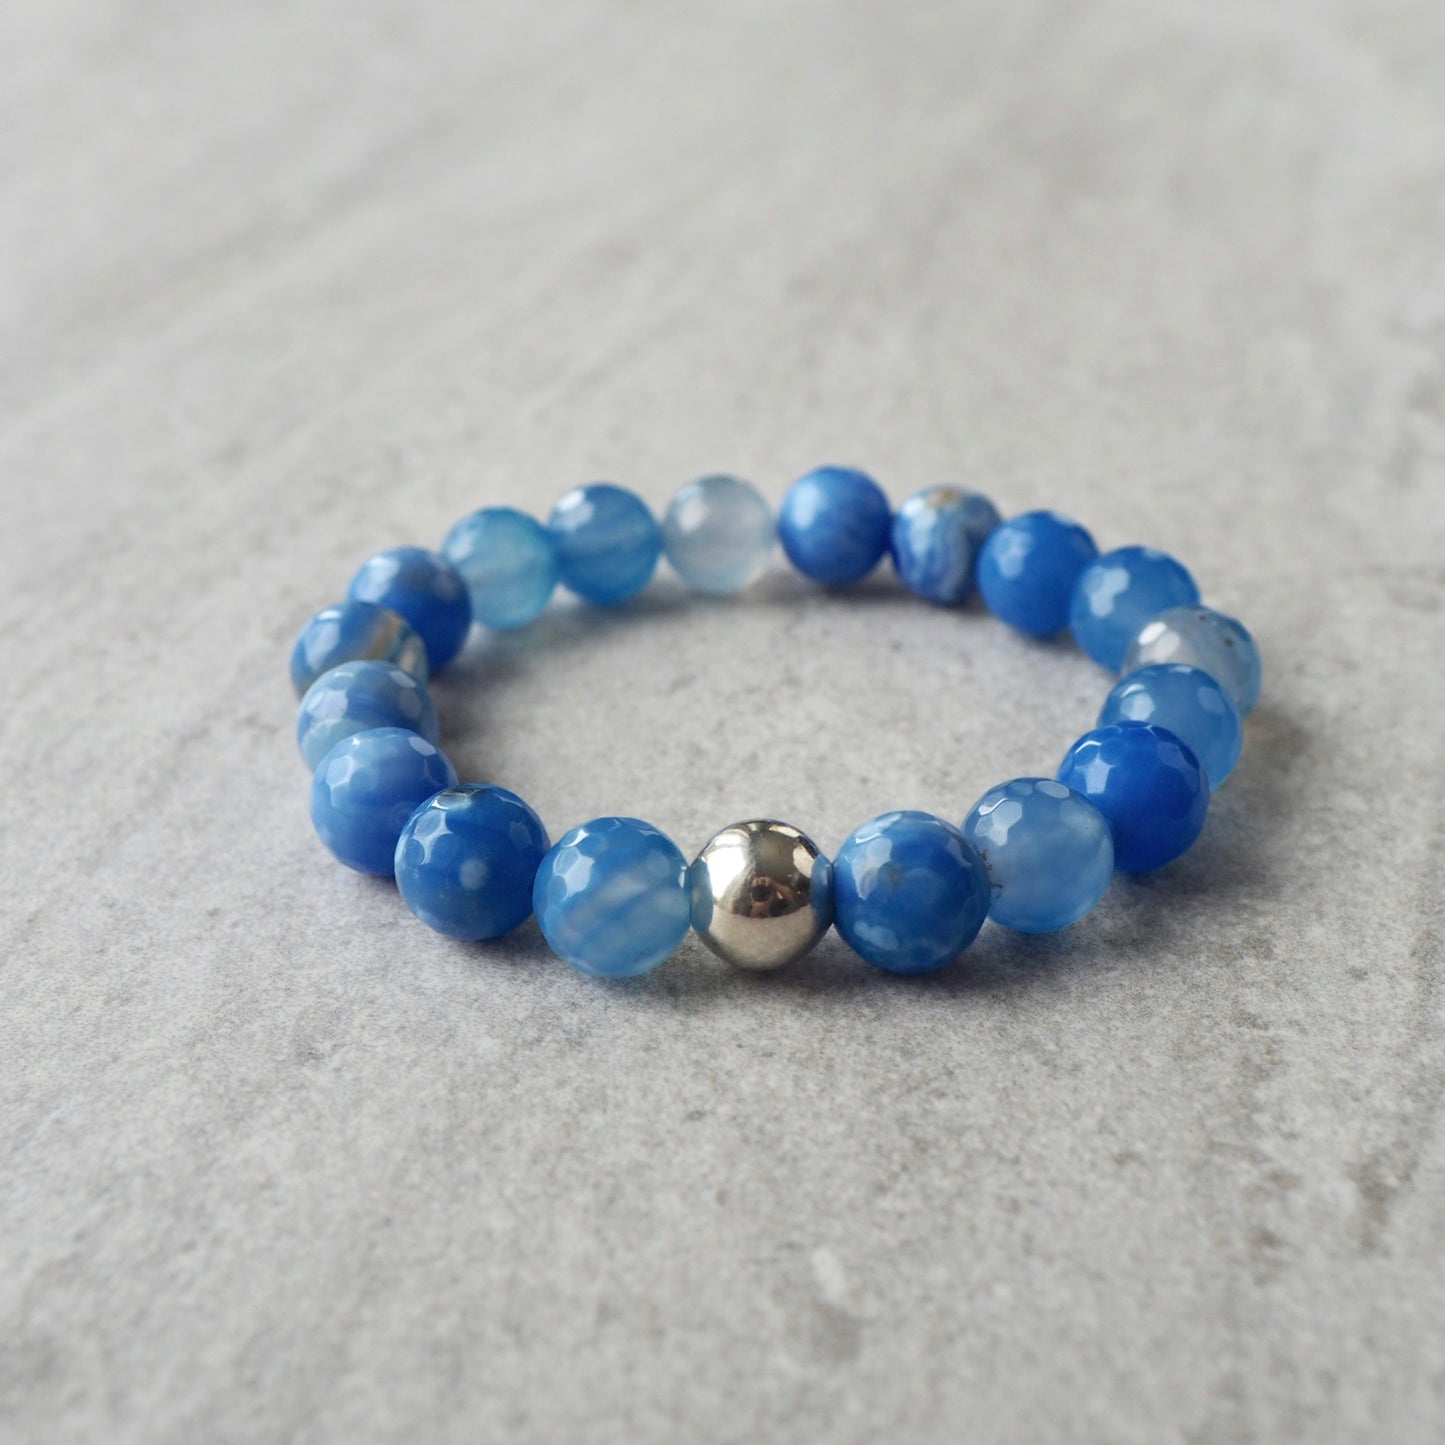 Blue Agate Bracelet by Nancy Wallis Designs